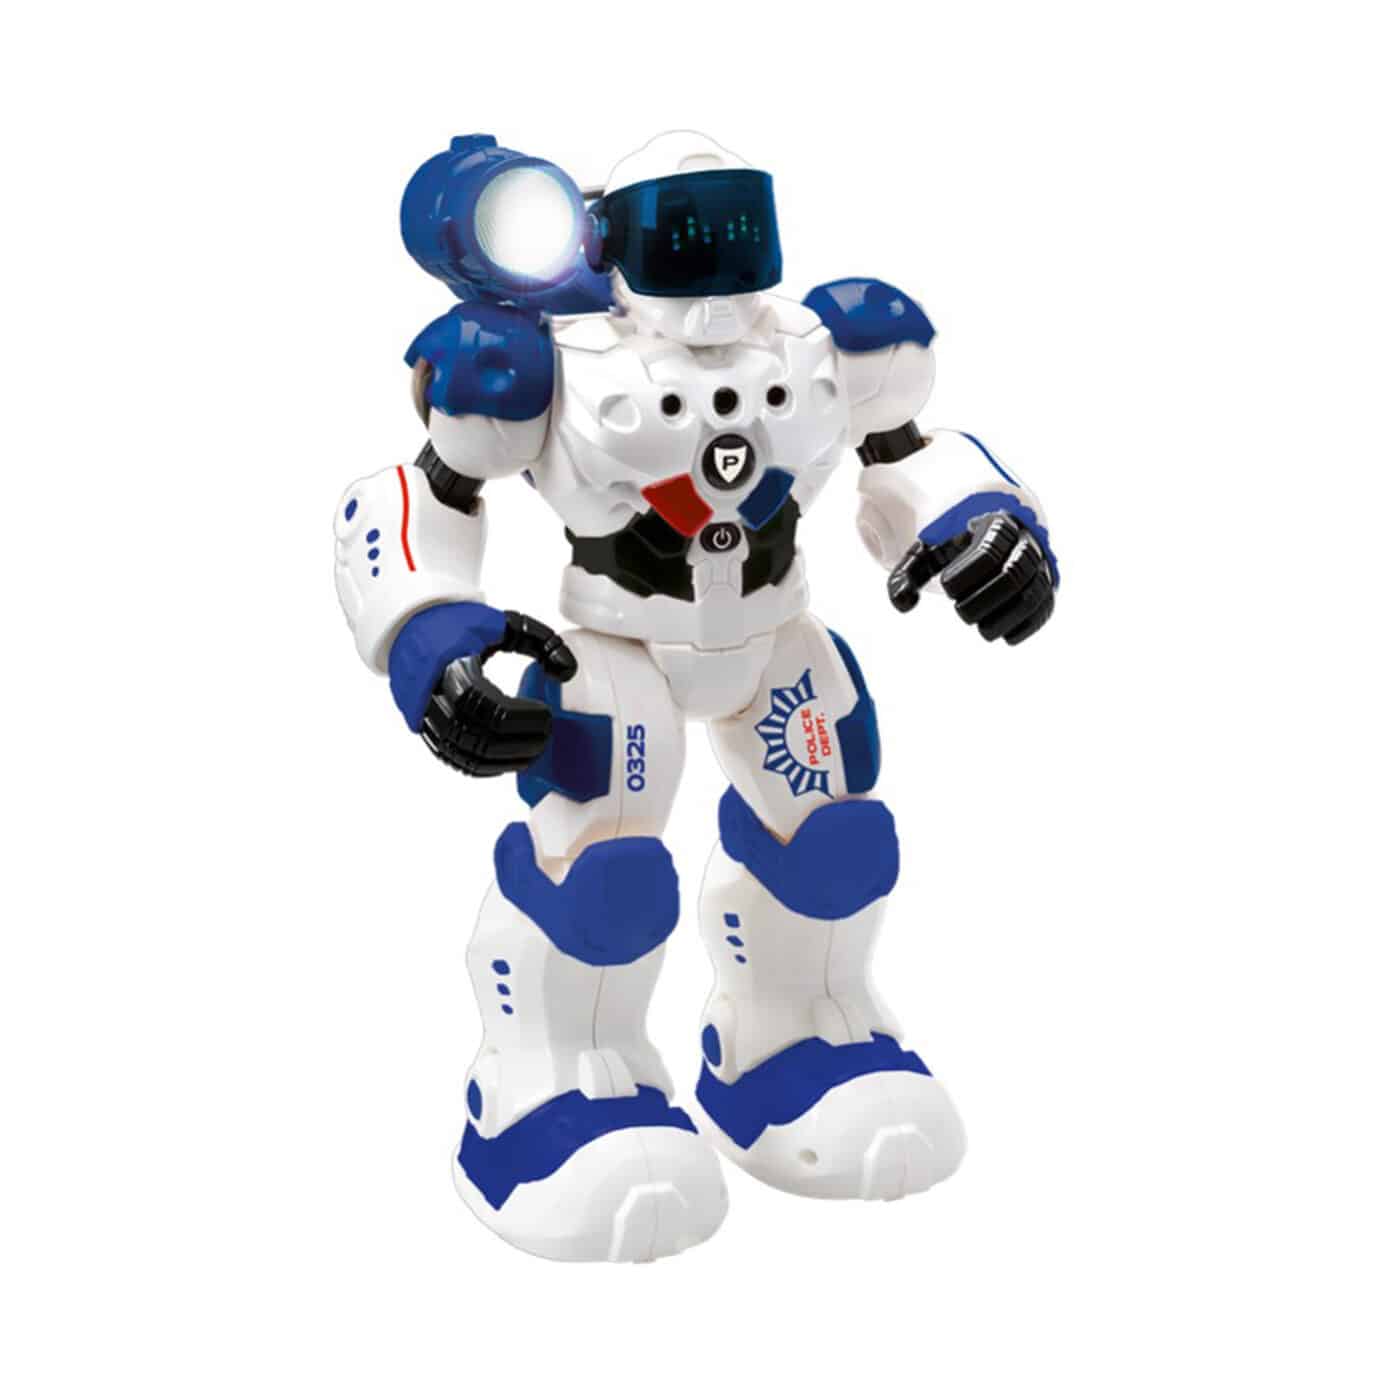 Xtreme Bots - Programmable Police Robot - Patrol